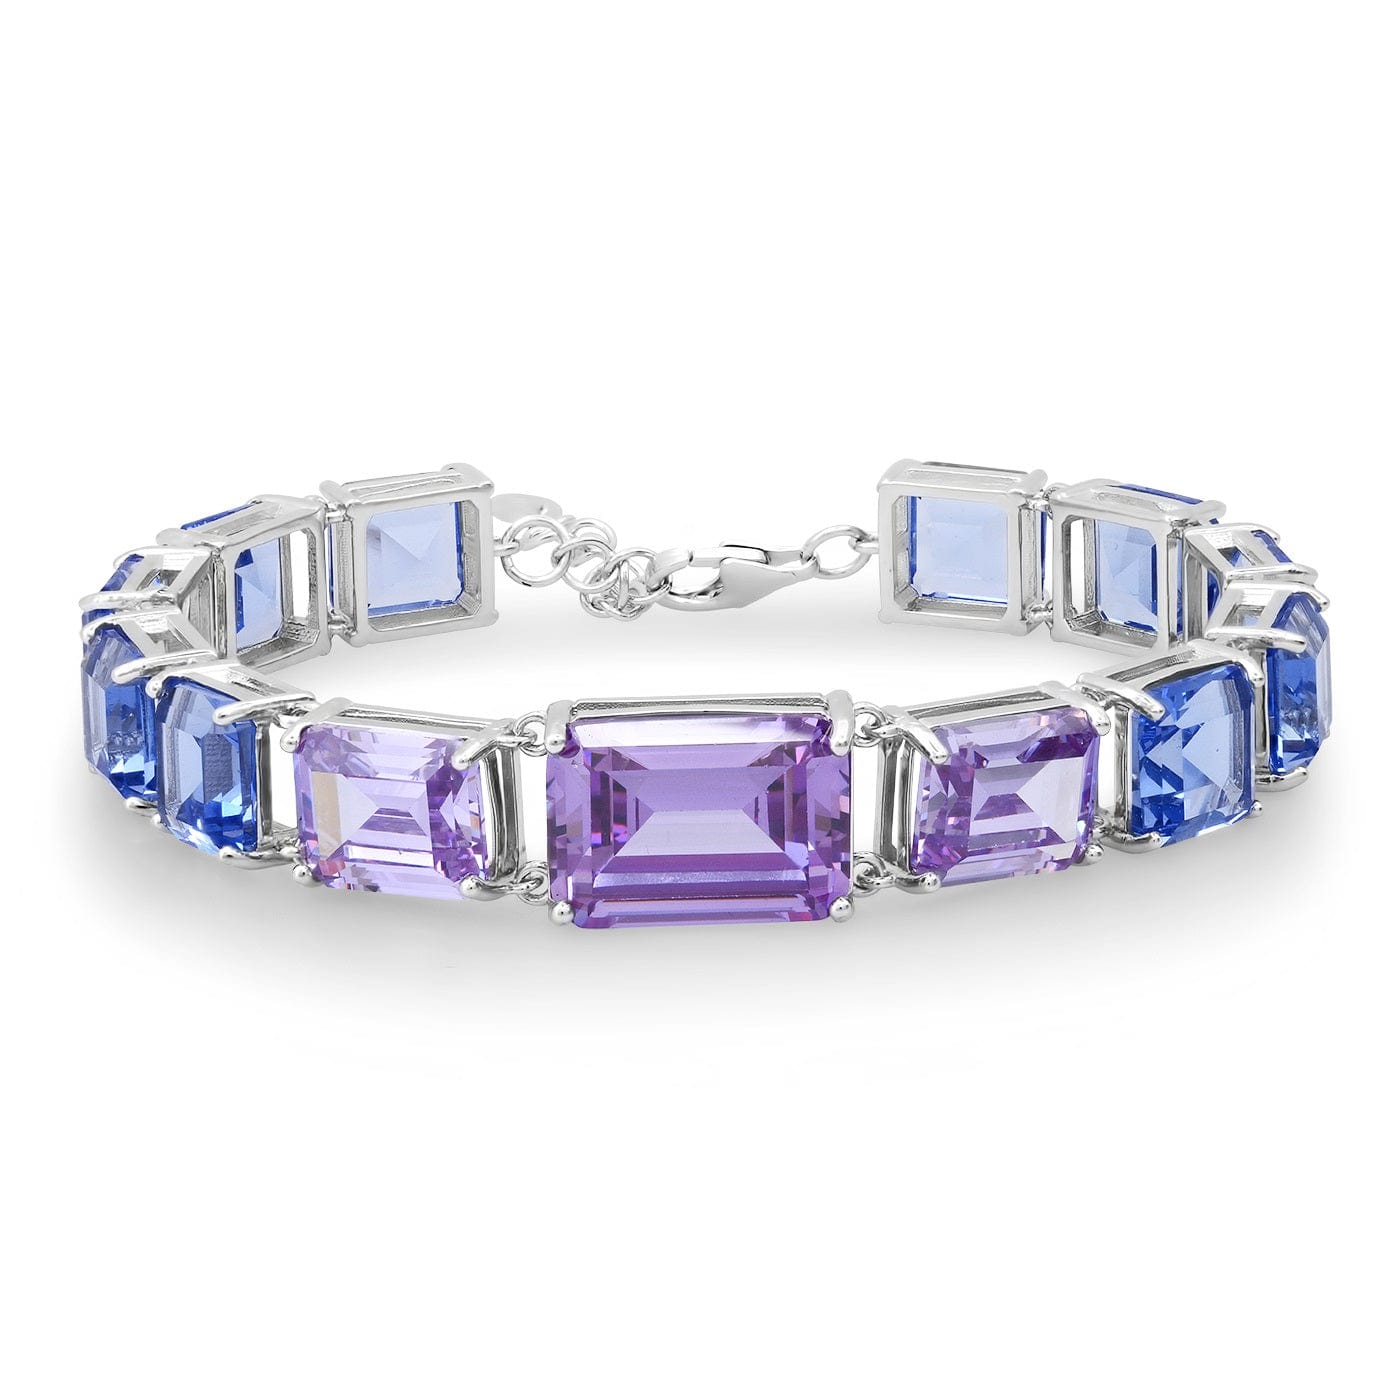 TAI JEWELRY Bracelet Sterling Silver/Lavender Chunky Emerald Cut Glass Bracelet